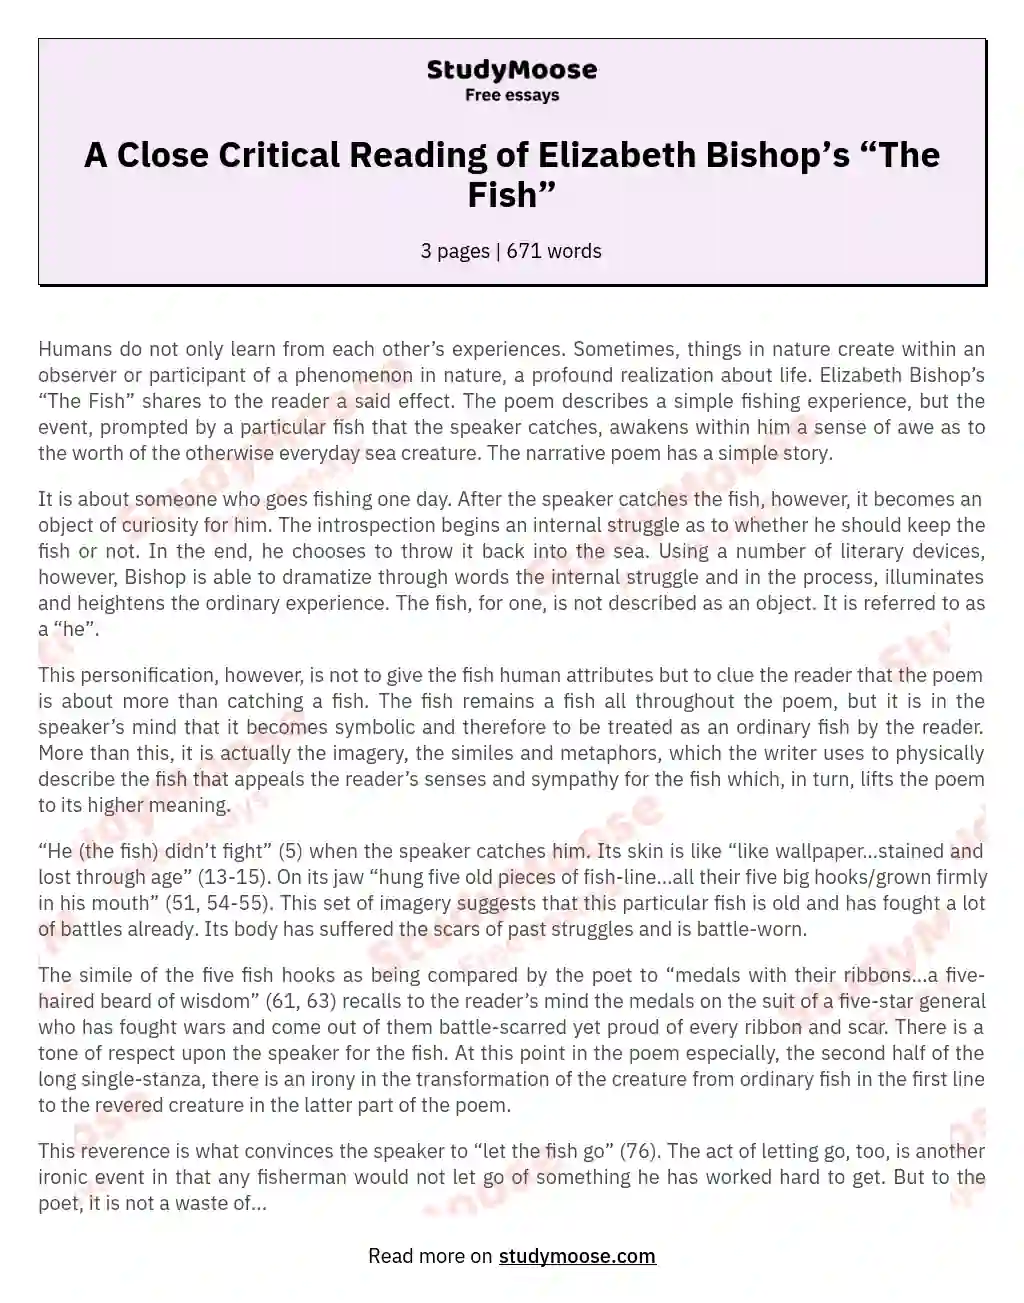 A Close Critical Reading of Elizabeth Bishop’s “The Fish” essay